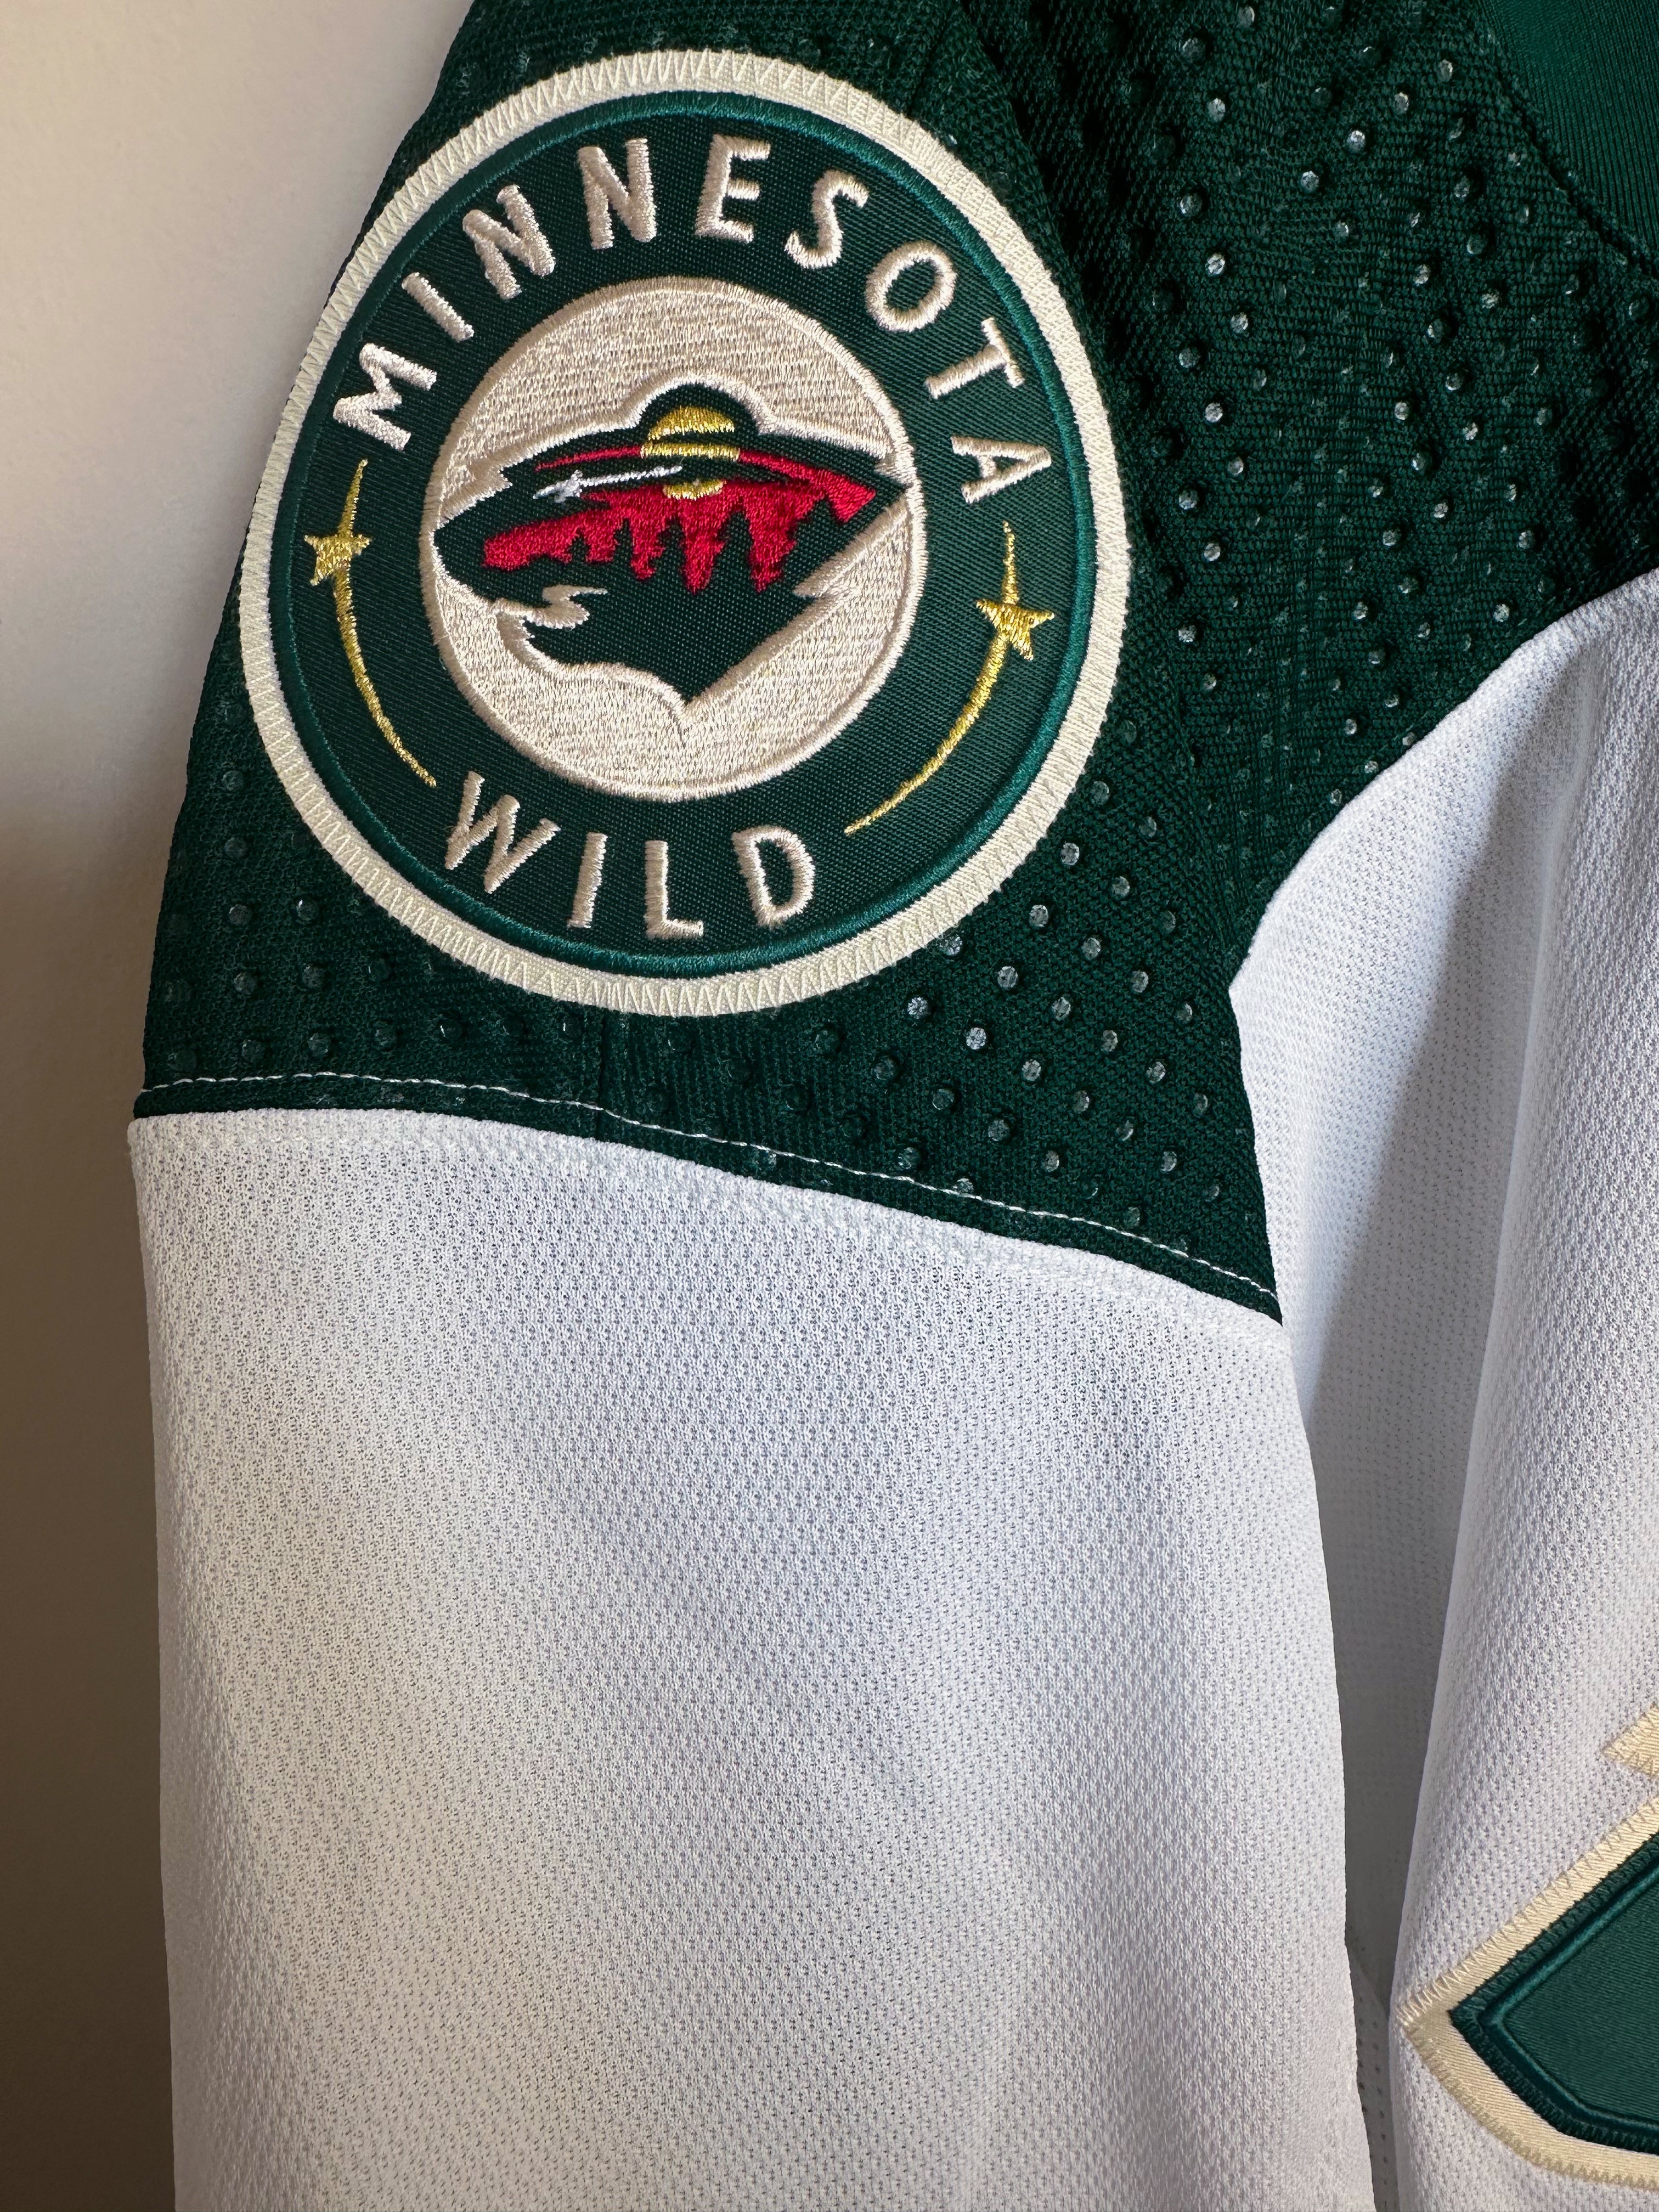 Minnesota Wild NHL Adidas MiC Primegreen Team Issued Away Jersey Size 60G (Goalie Cut)